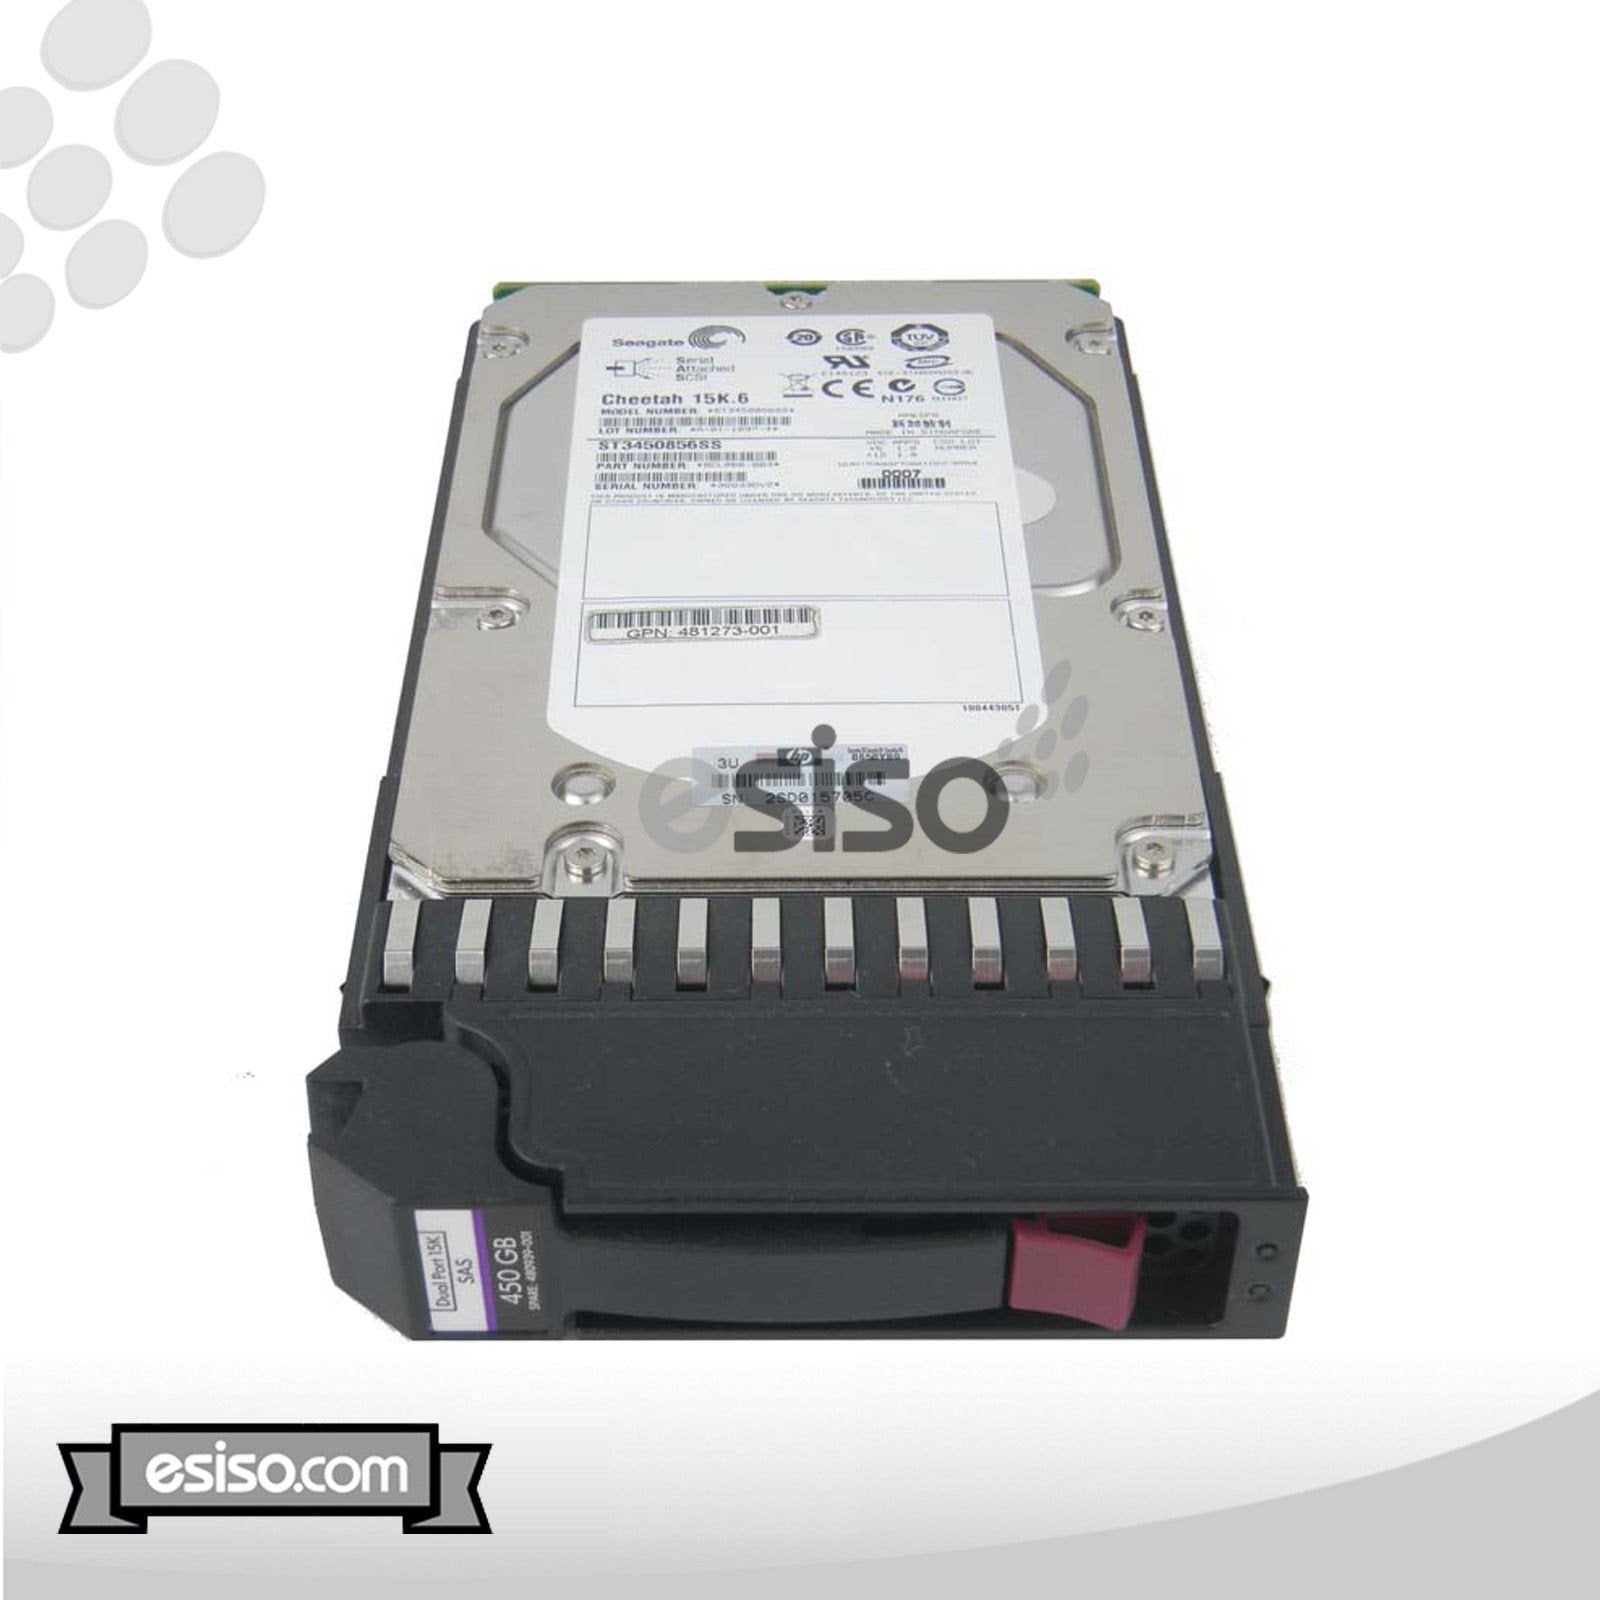 480939-001 ST3450857SS HPE 450GB 15K DP LFF 3.5" SAS HDD HARD DRIVE FOR MSA2